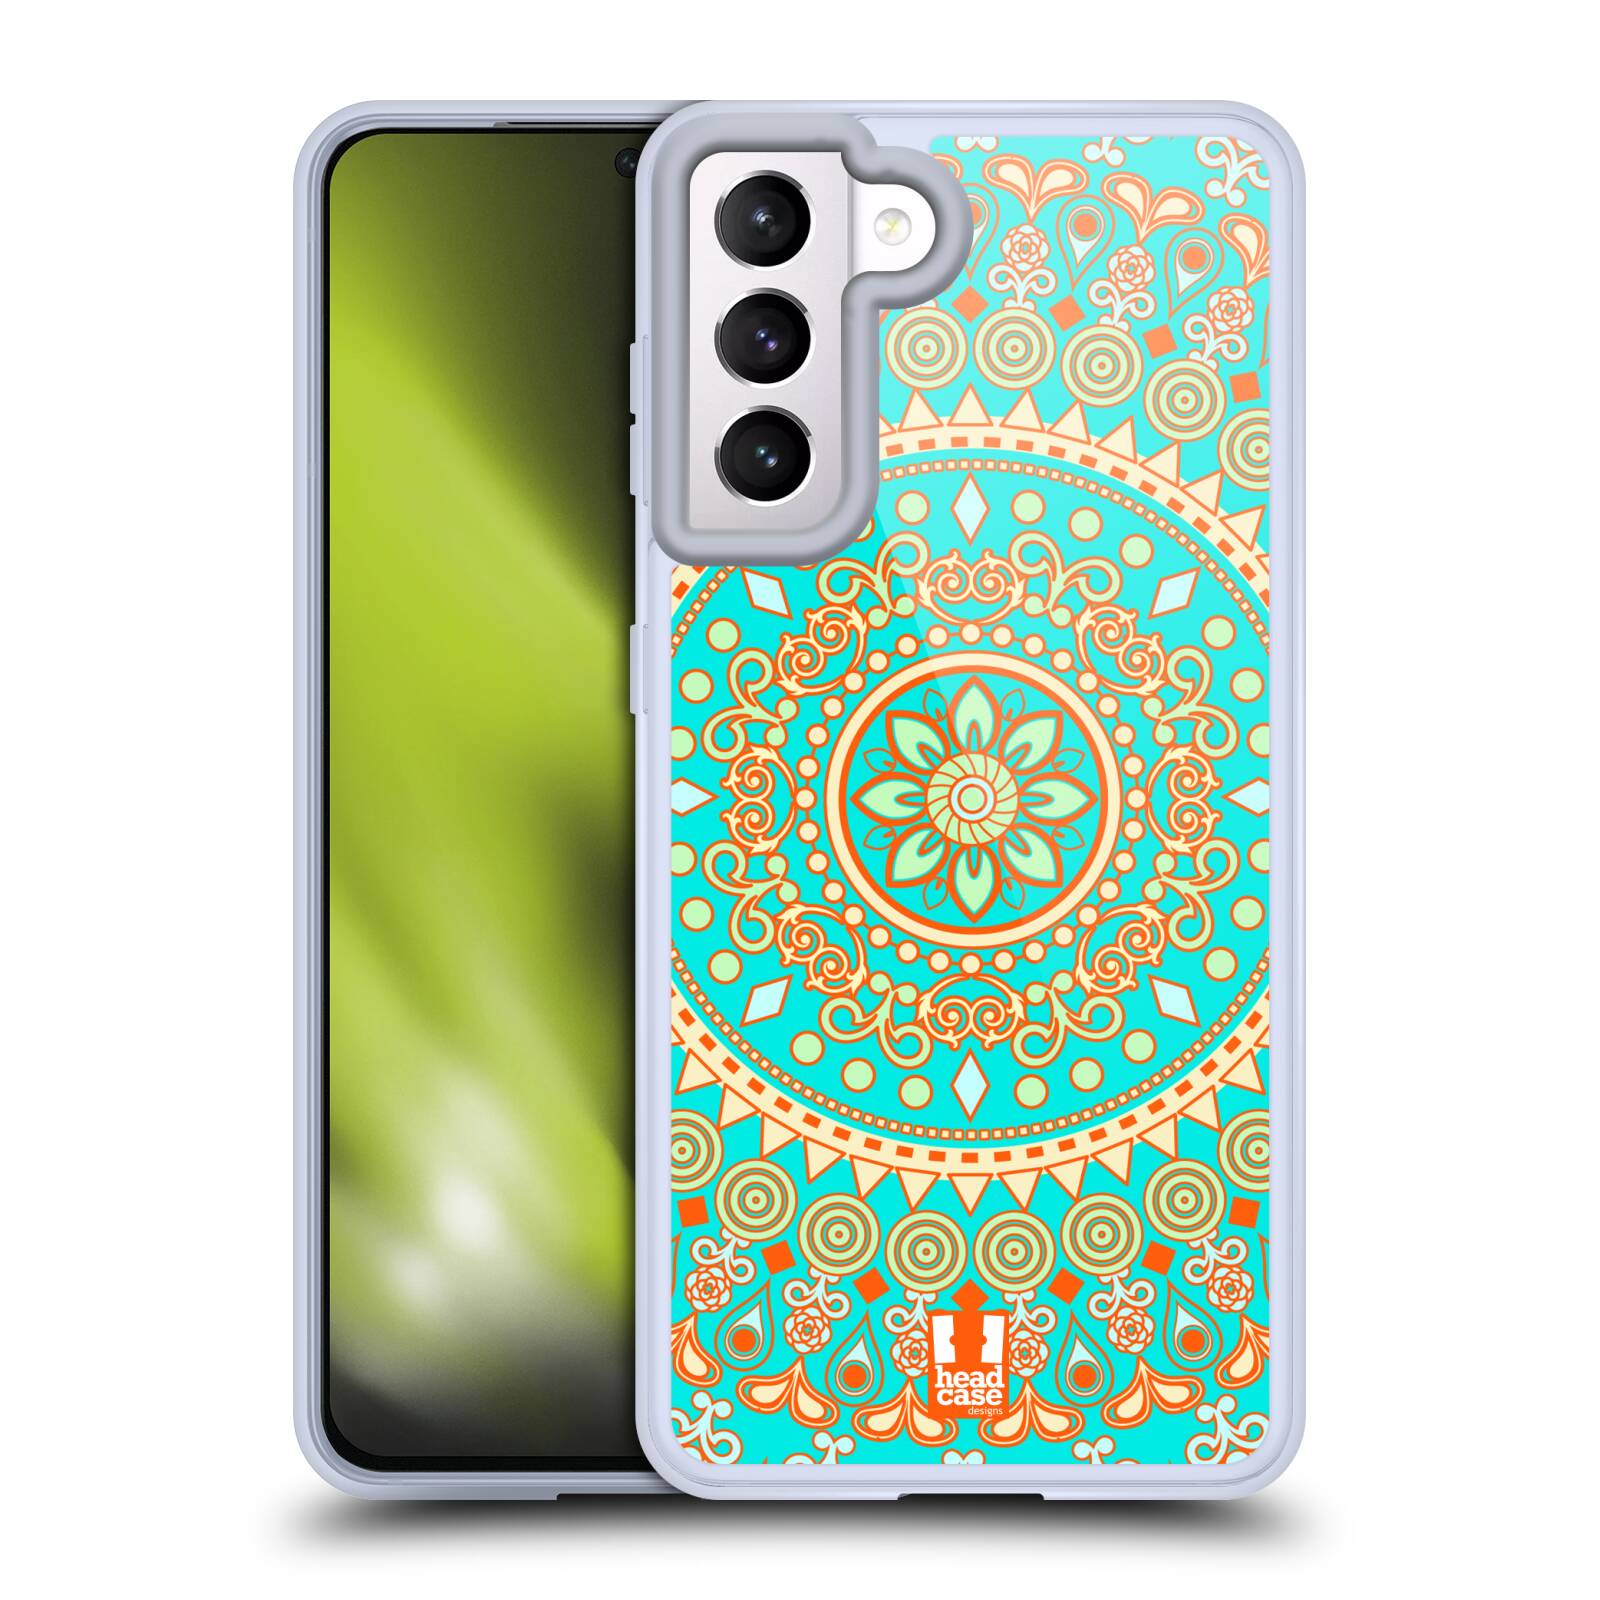 Plastový obal HEAD CASE na mobil Samsung Galaxy S21 5G vzor Indie Mandala slunce barevný motiv TYRKYSOVÁ, ZELENÁ